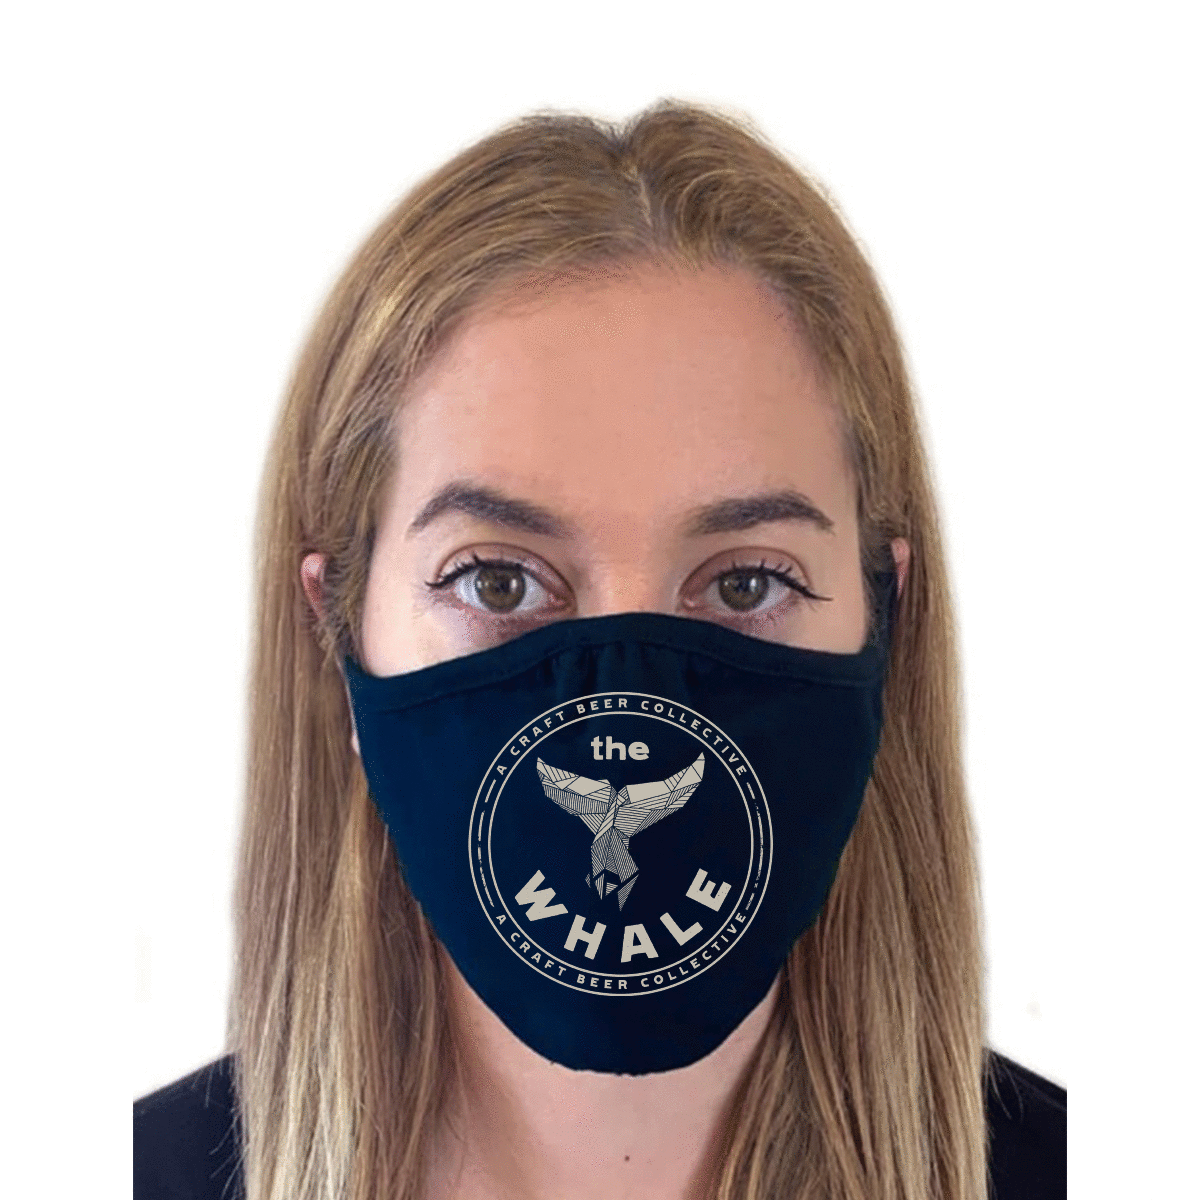 Press Press Merch - Virginia - Custom Face Mask - Brewery or Craft Beer Bar Logo printed on a face mask